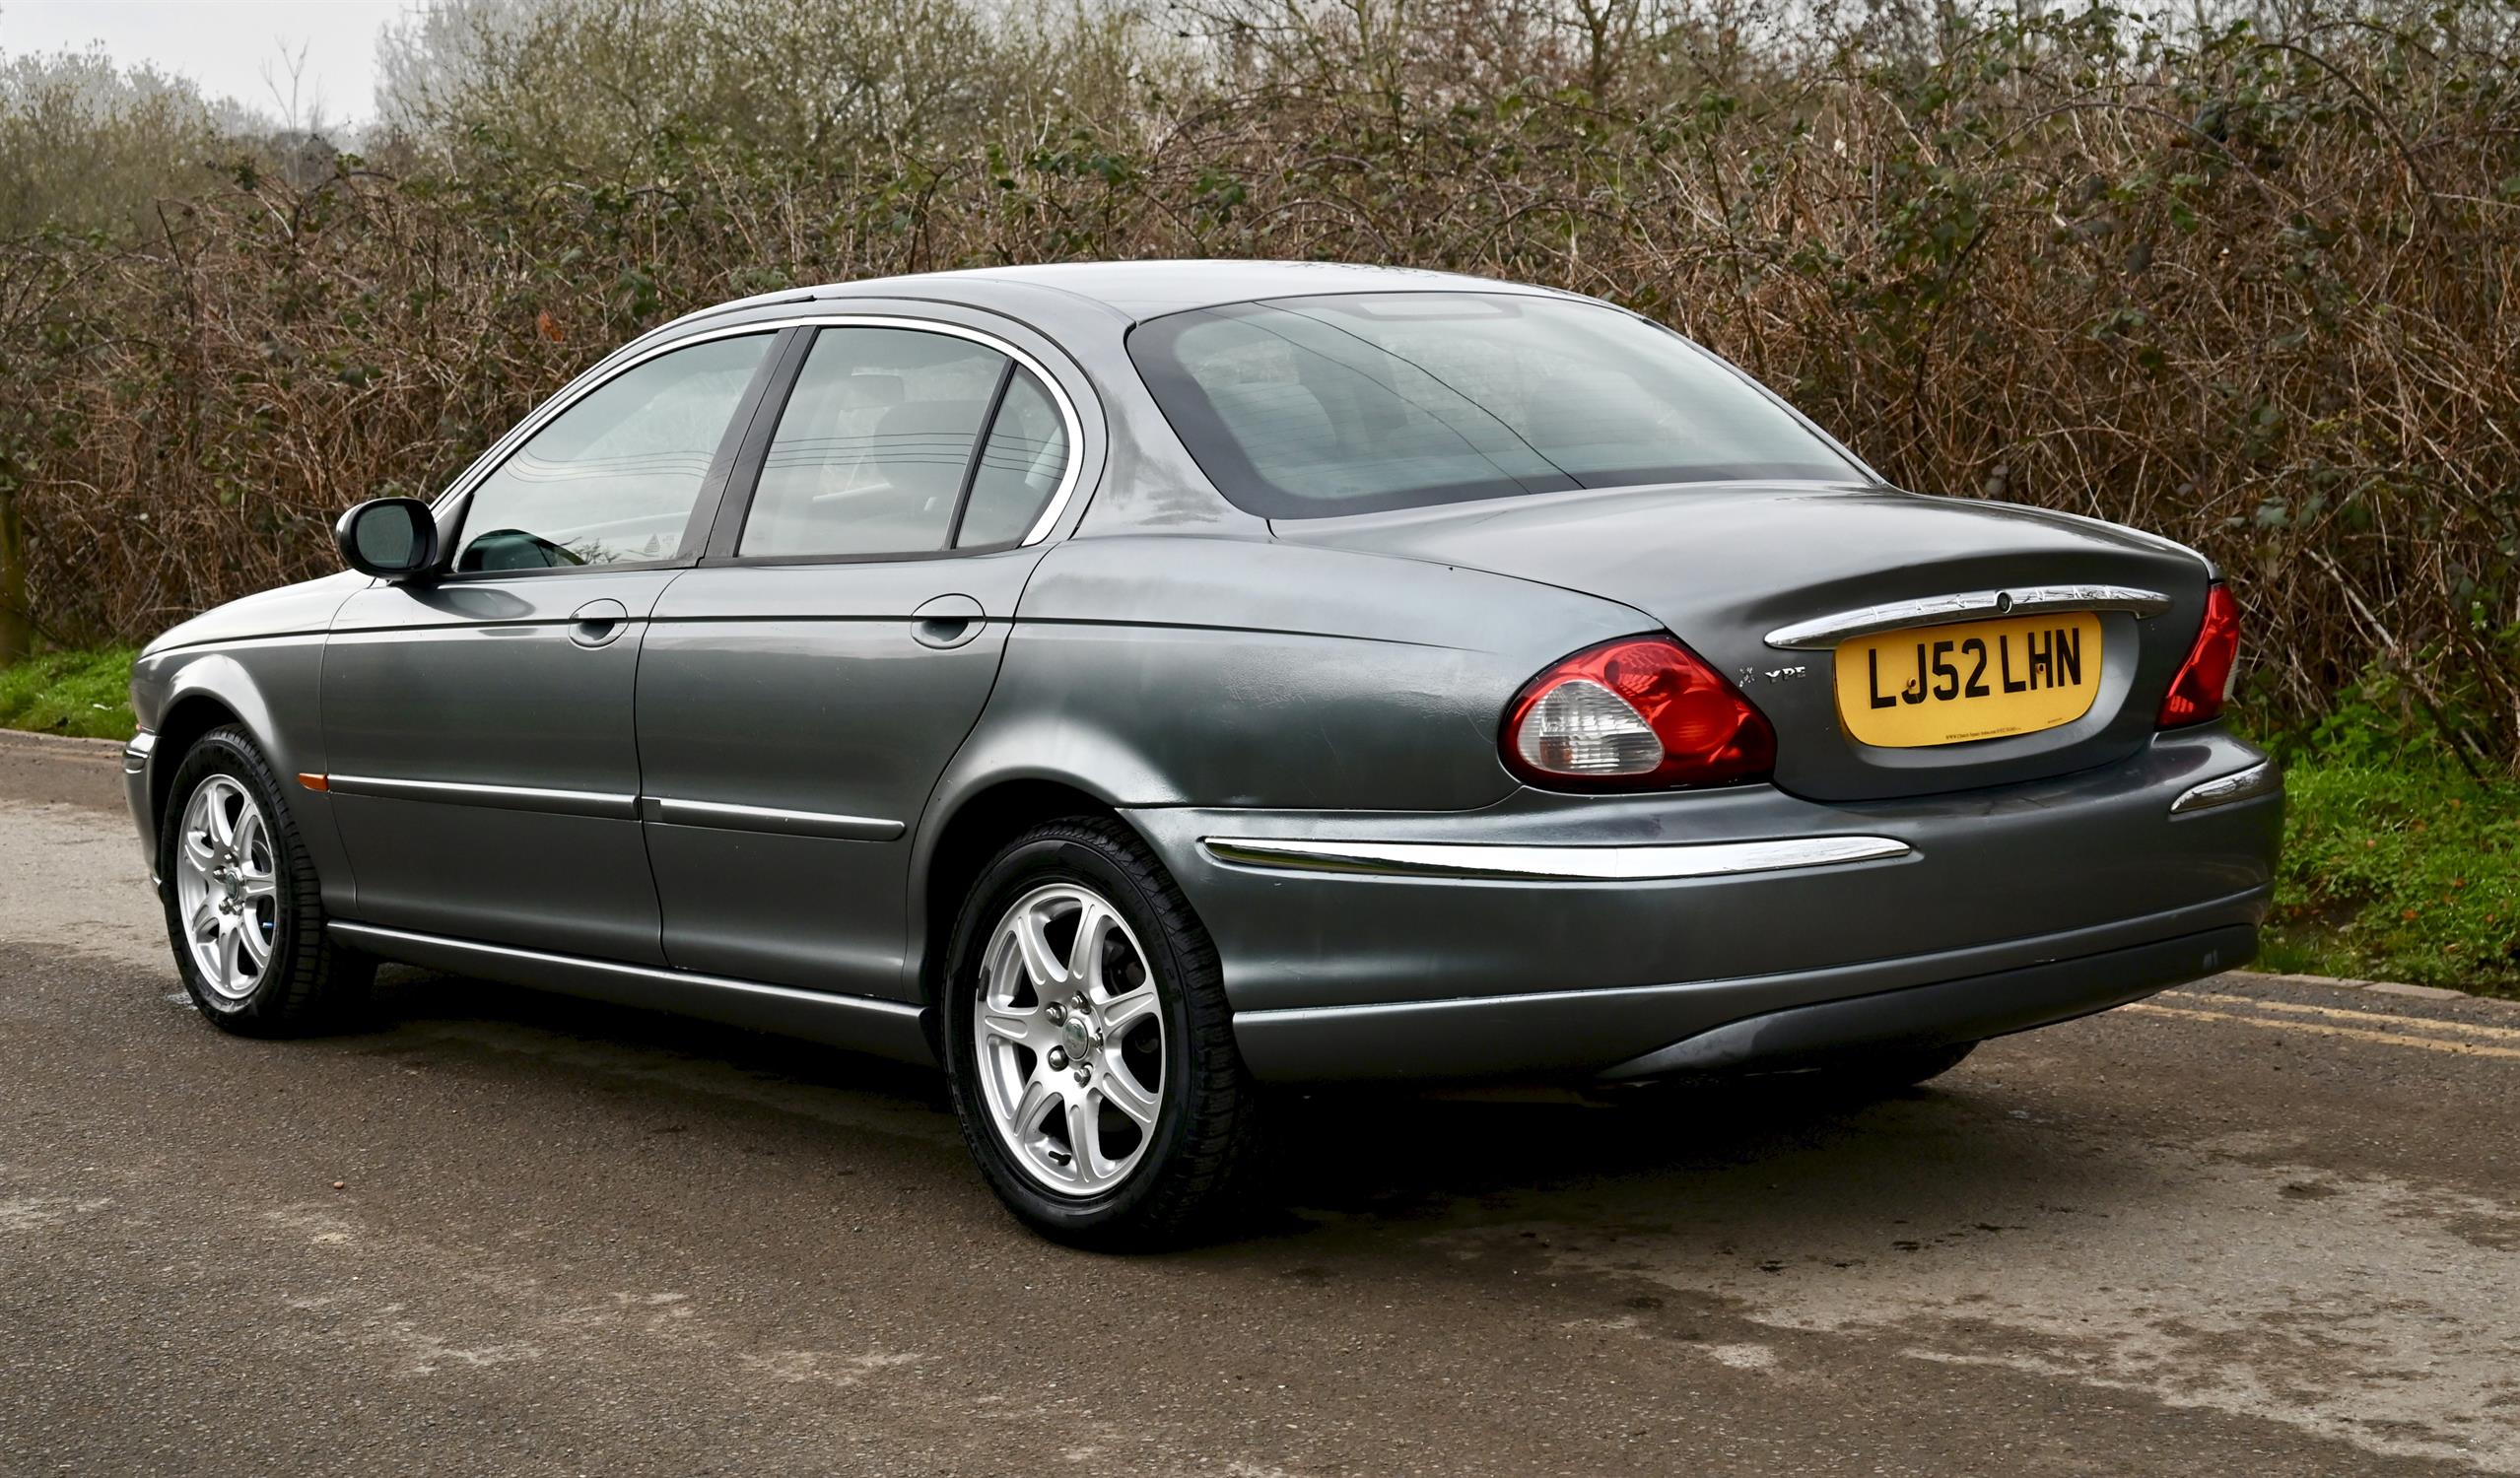 2002 Jaguar X-Type V6 Saloon. Registration number: LJ52 LHN Mileage: 94,400. Gunmetal Metallic - Image 3 of 9